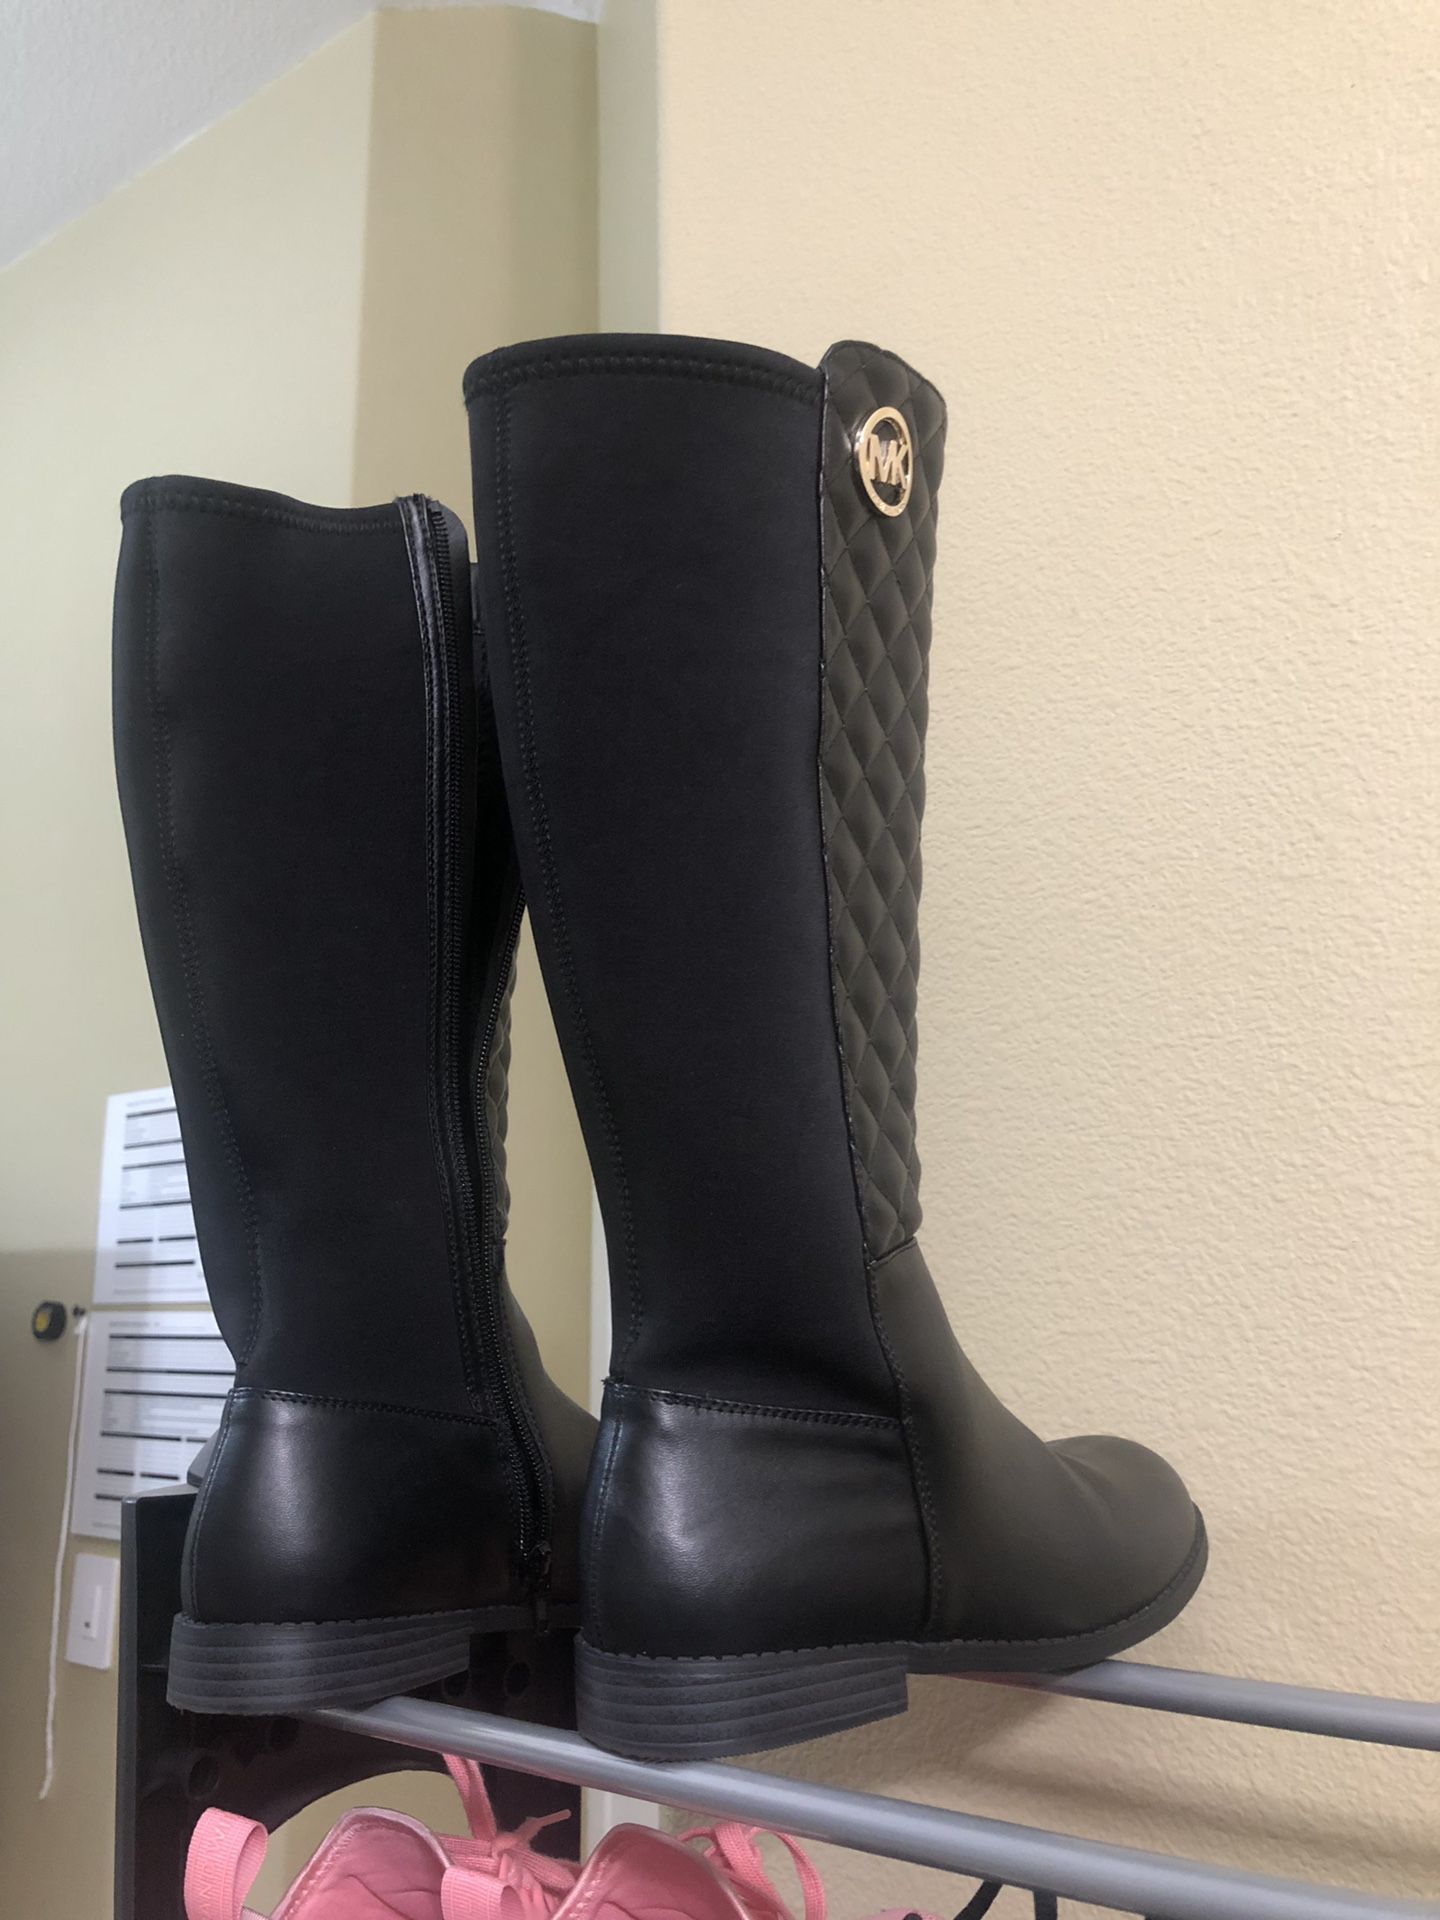 Michael Kors women’s boots. Size 5-5.5